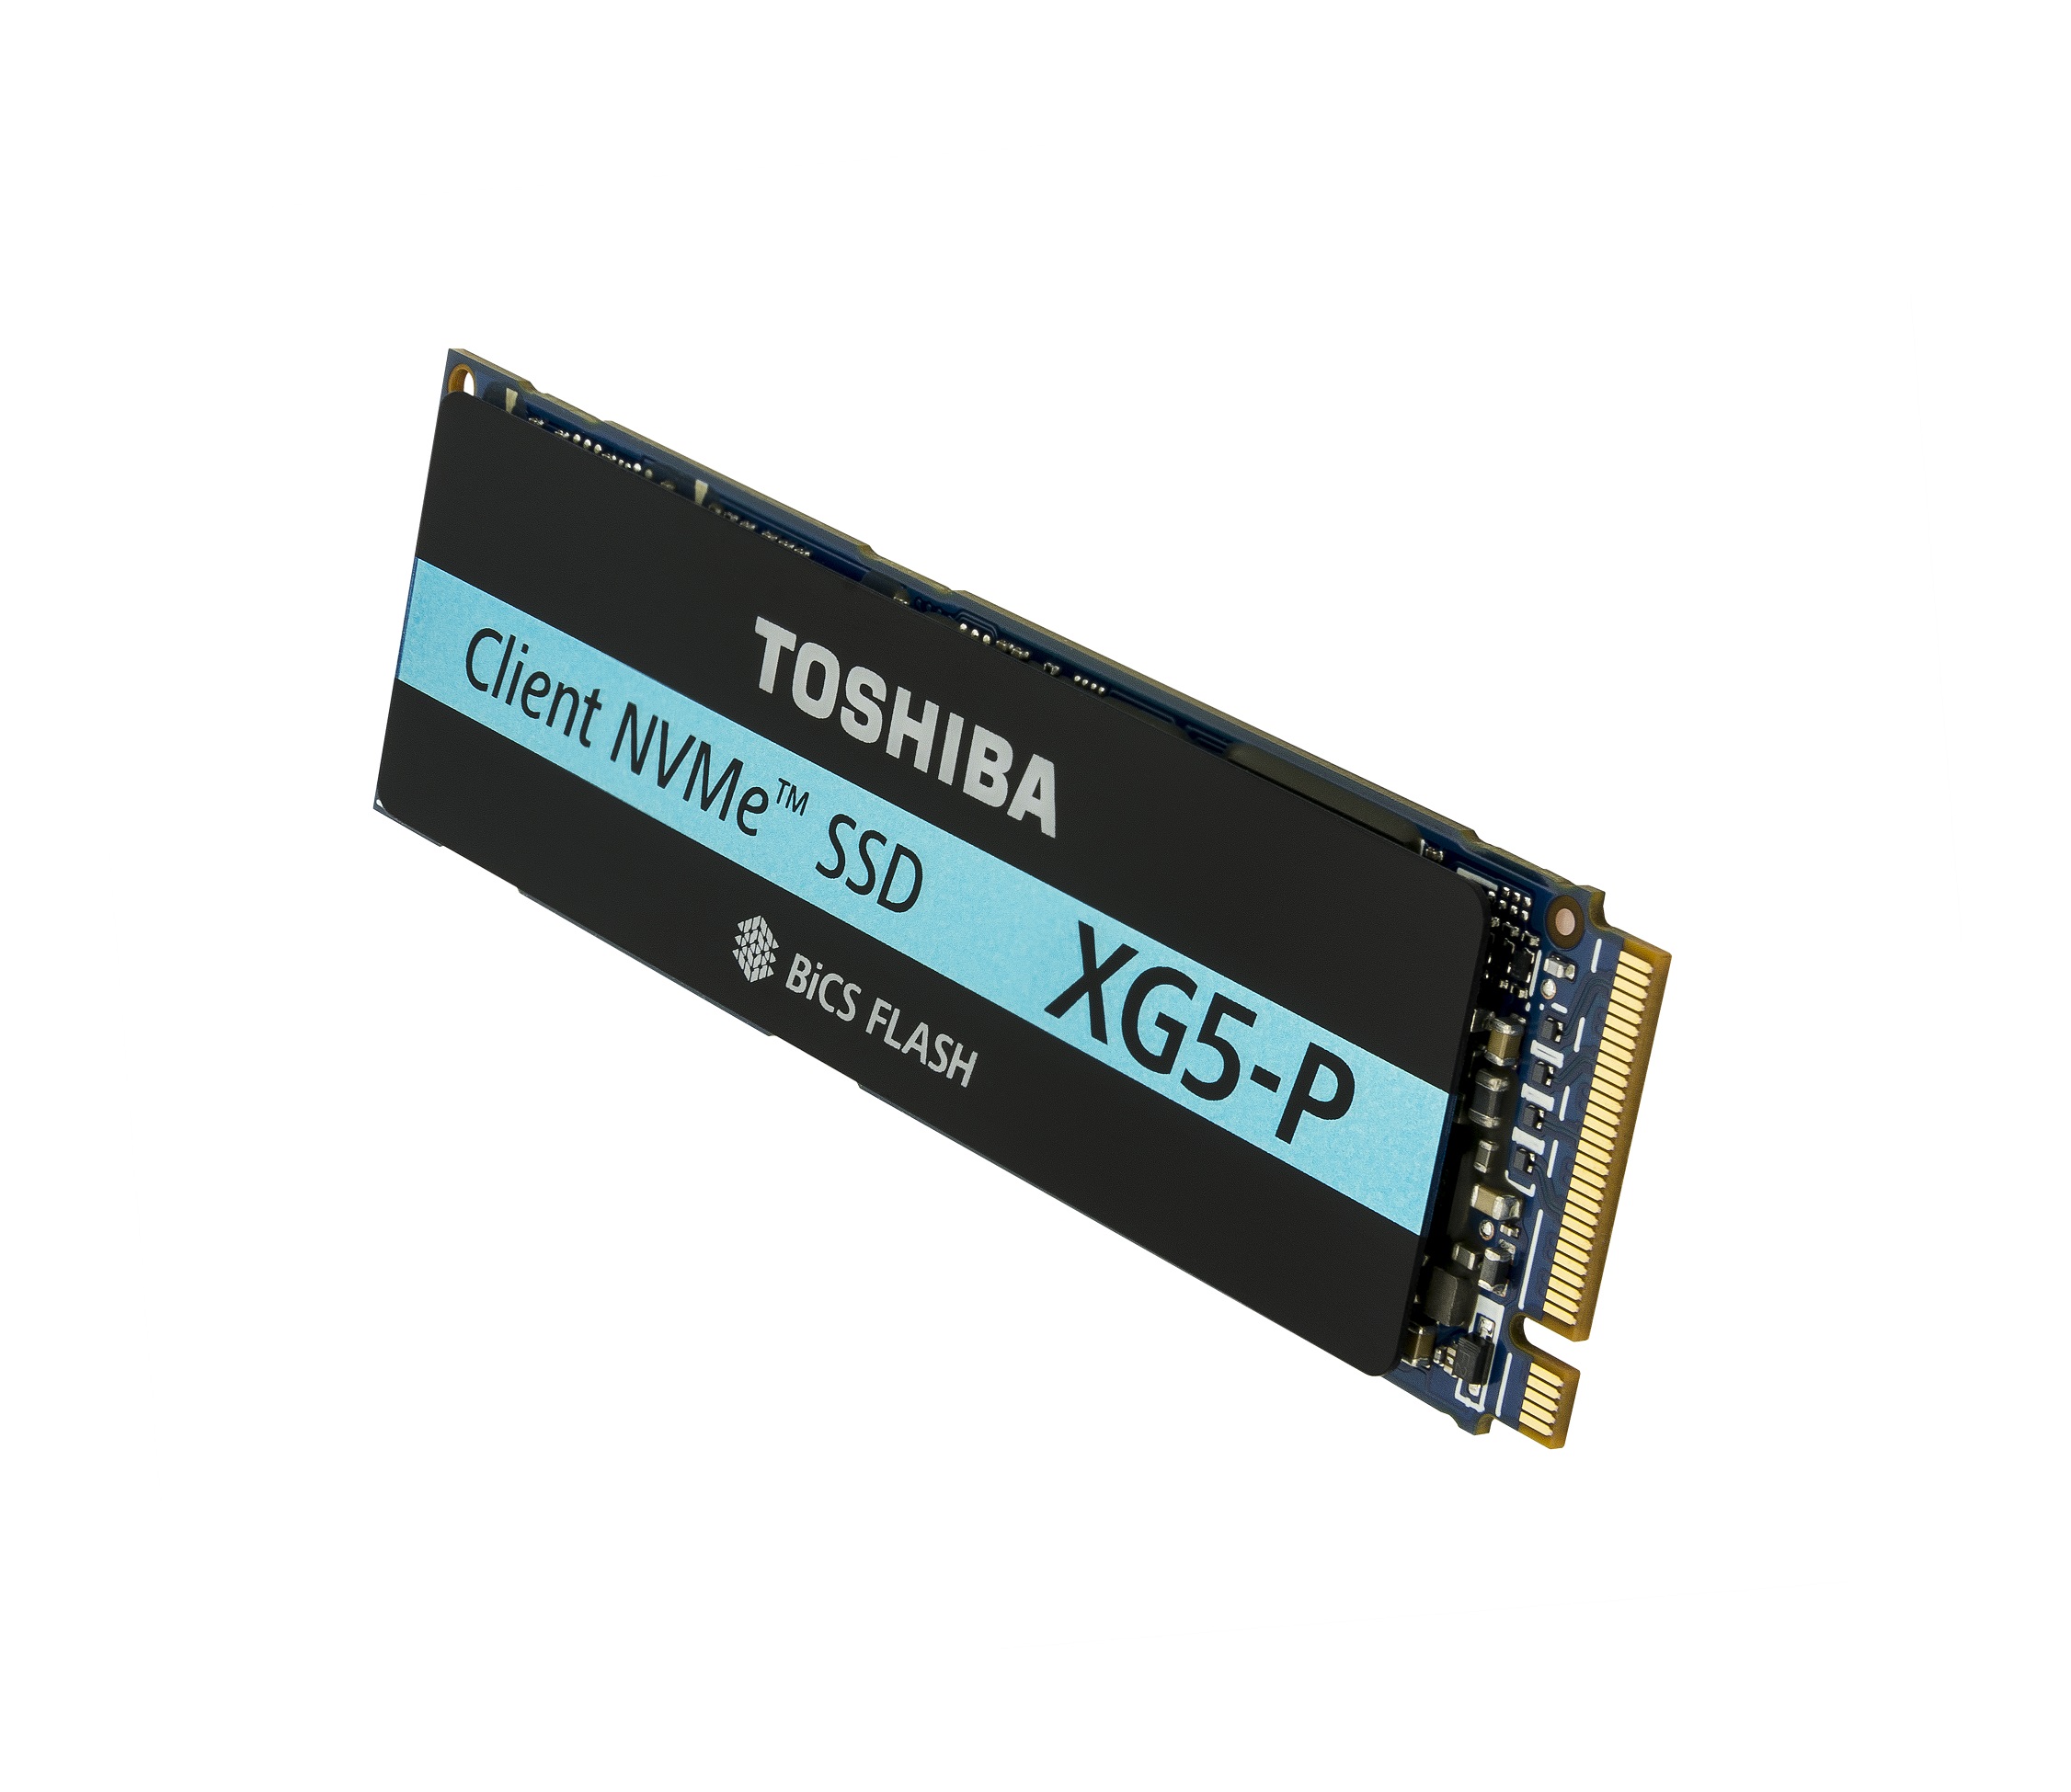 Toshiba Client SSD XG5-P